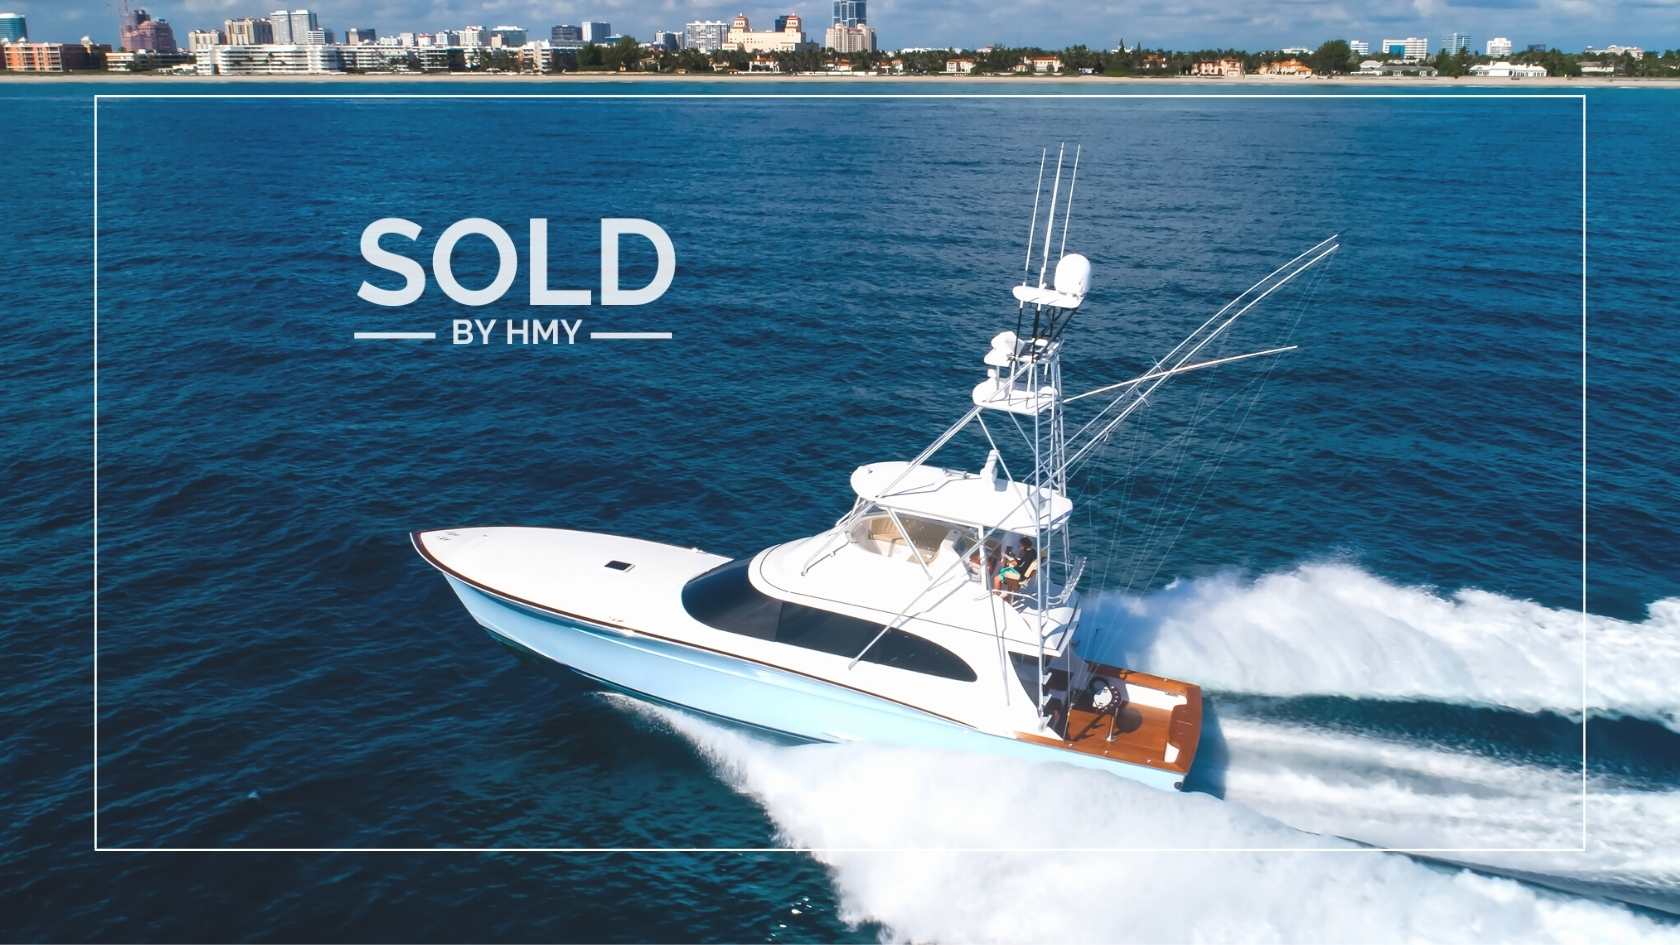 Spencer 57′ Custom Sportfish Sold By HMY Yacht Sales Professional Jeff Thiel